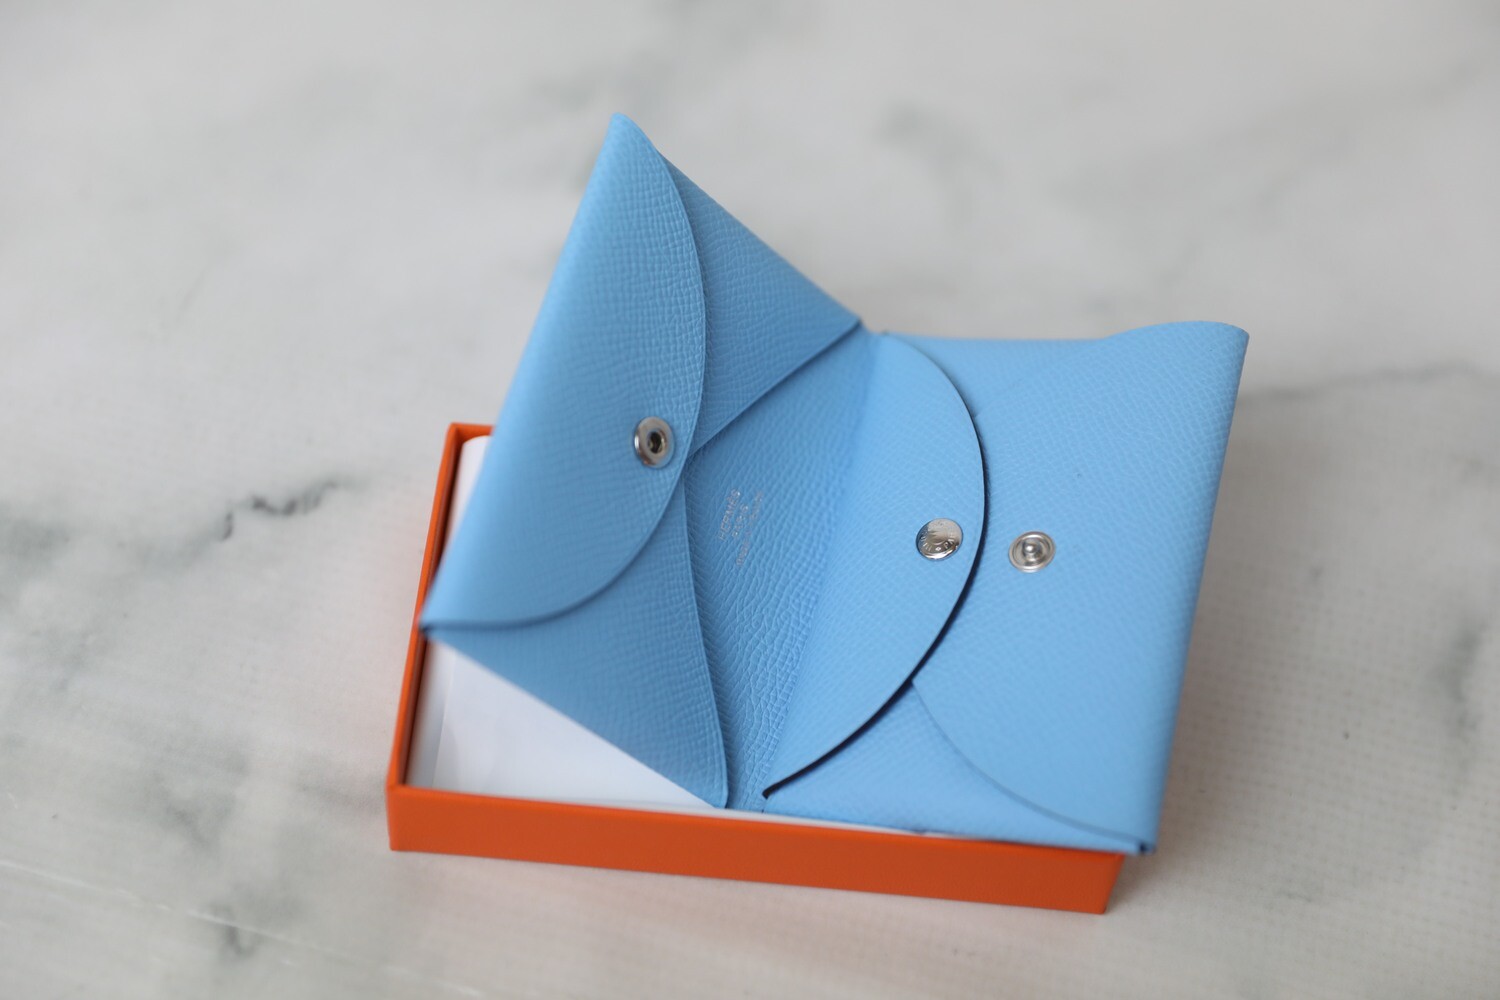 Hermes SLG Calvi Duo Cardholder Wallet, Blue, New in Box WA001